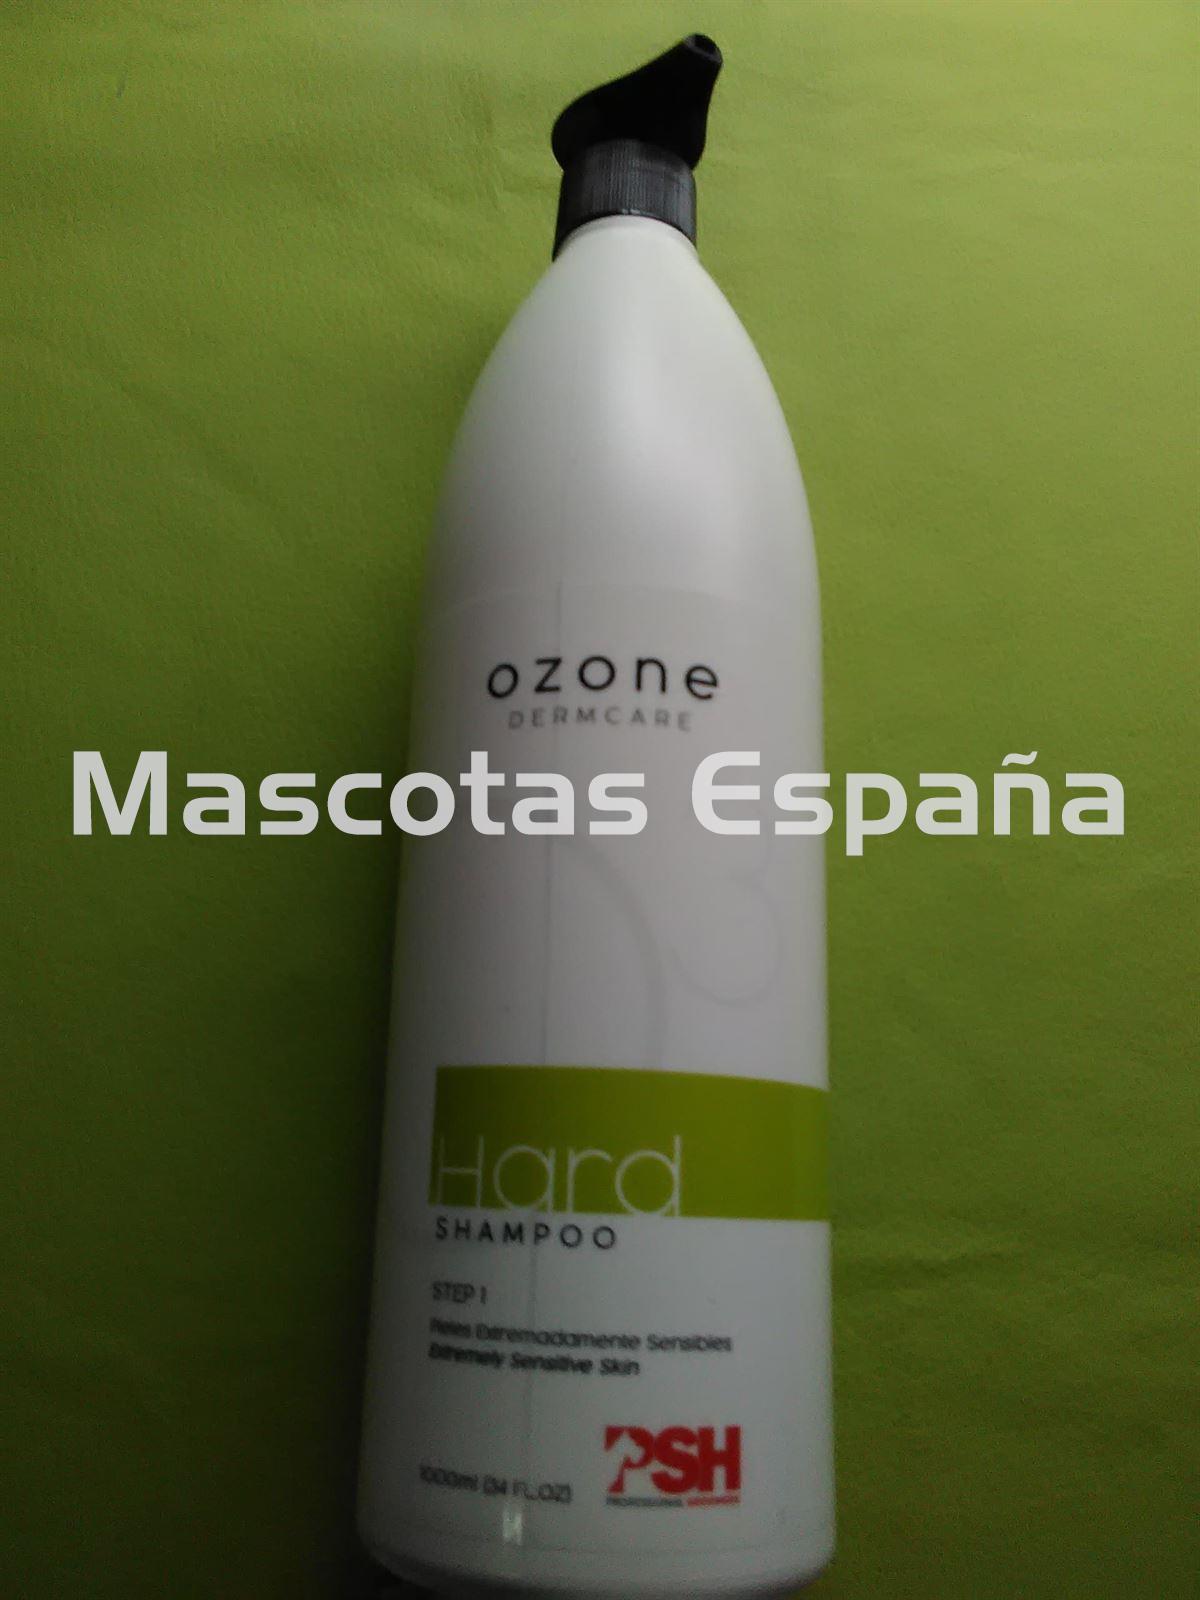 PSH OZONE Dermcare Hard Shampoo Step1 (Pieles Extremadamente Sensibles) 1L - Imagen 1